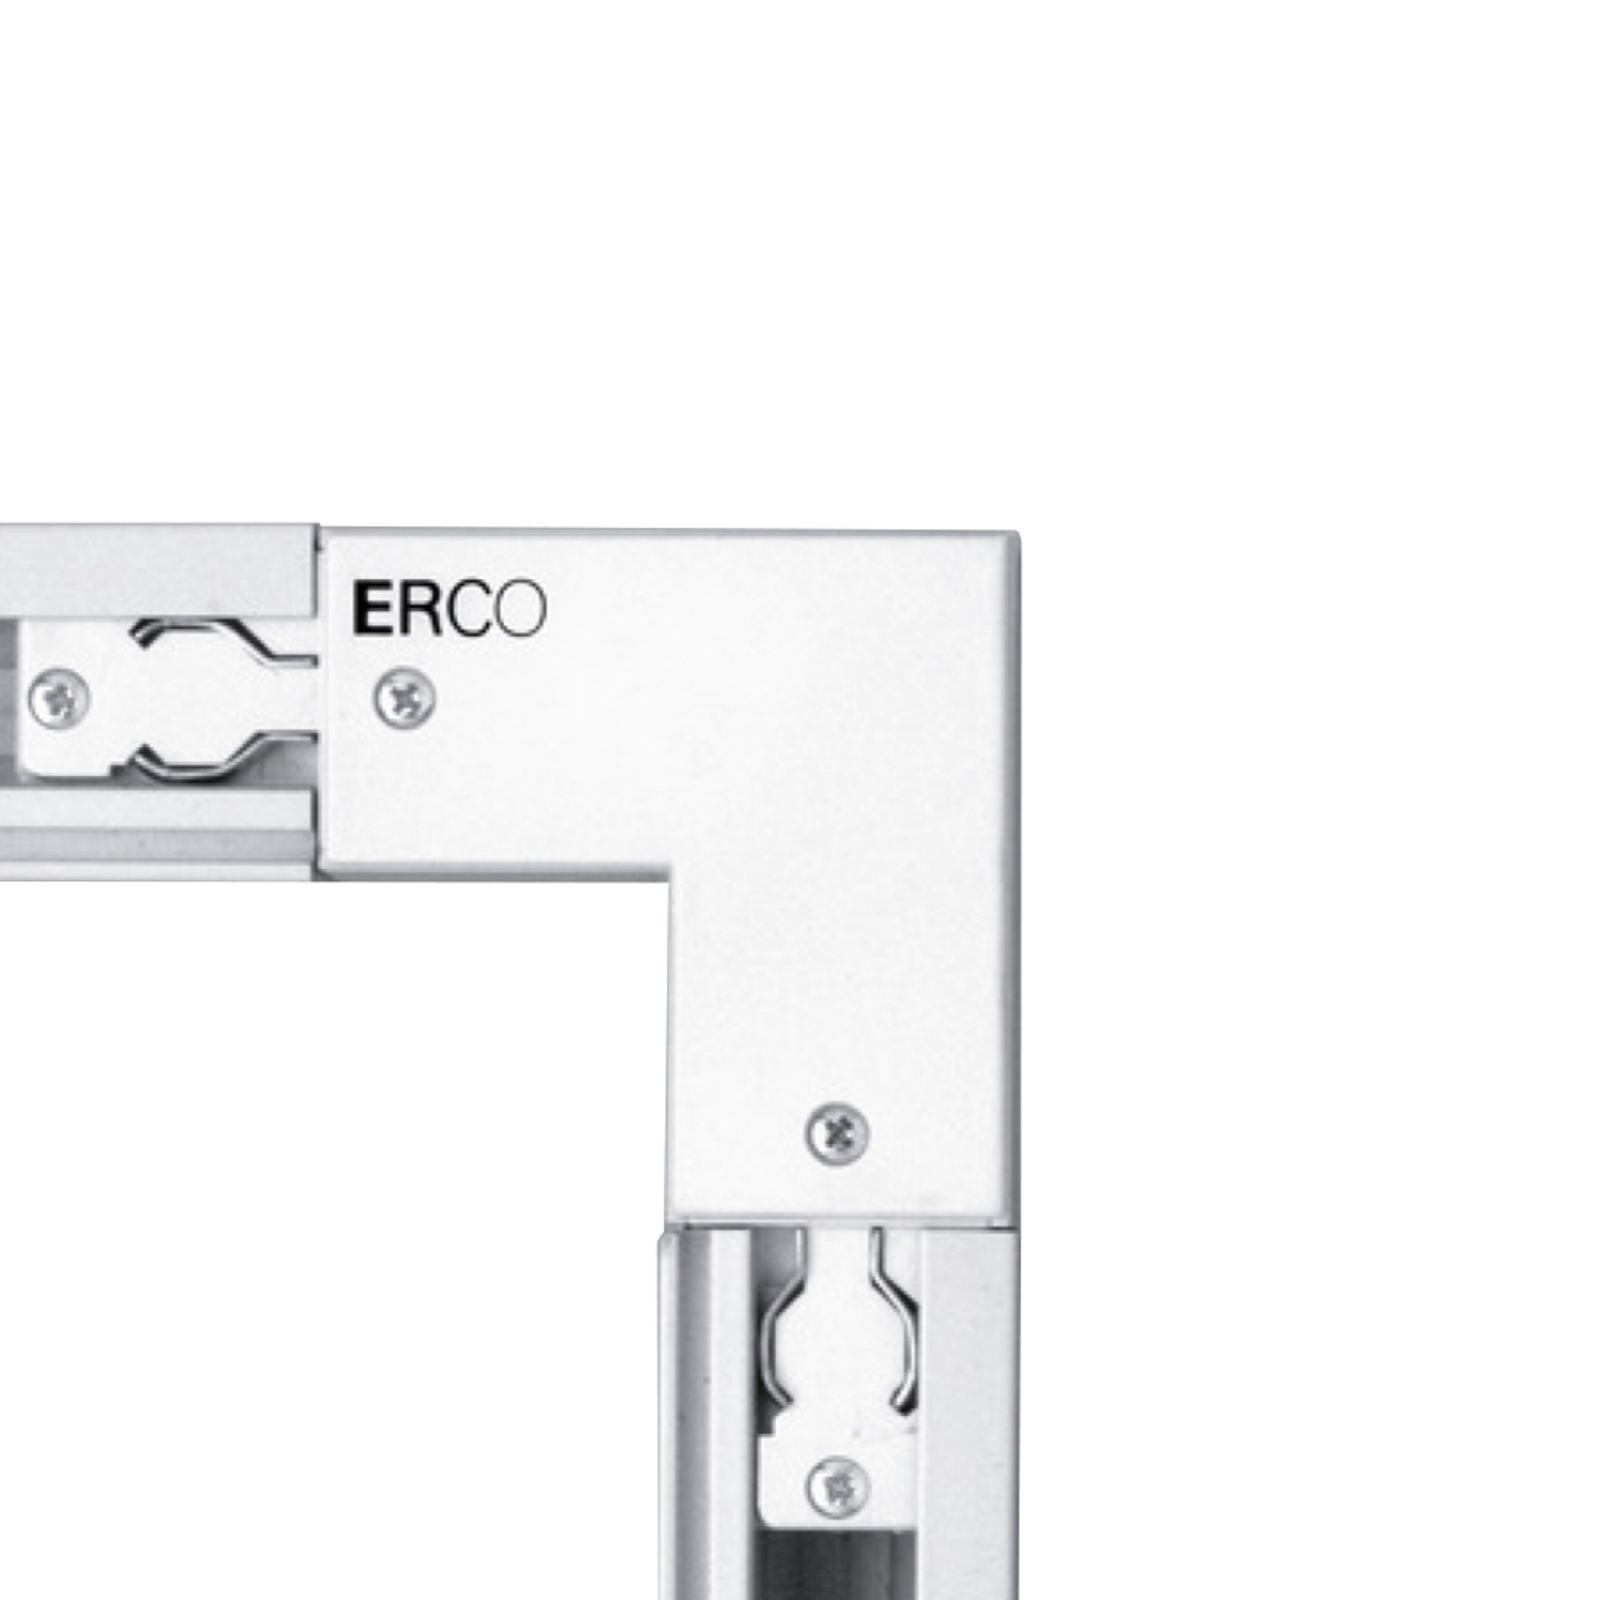 ERCO 3-circuit corner connector, PE inside, white